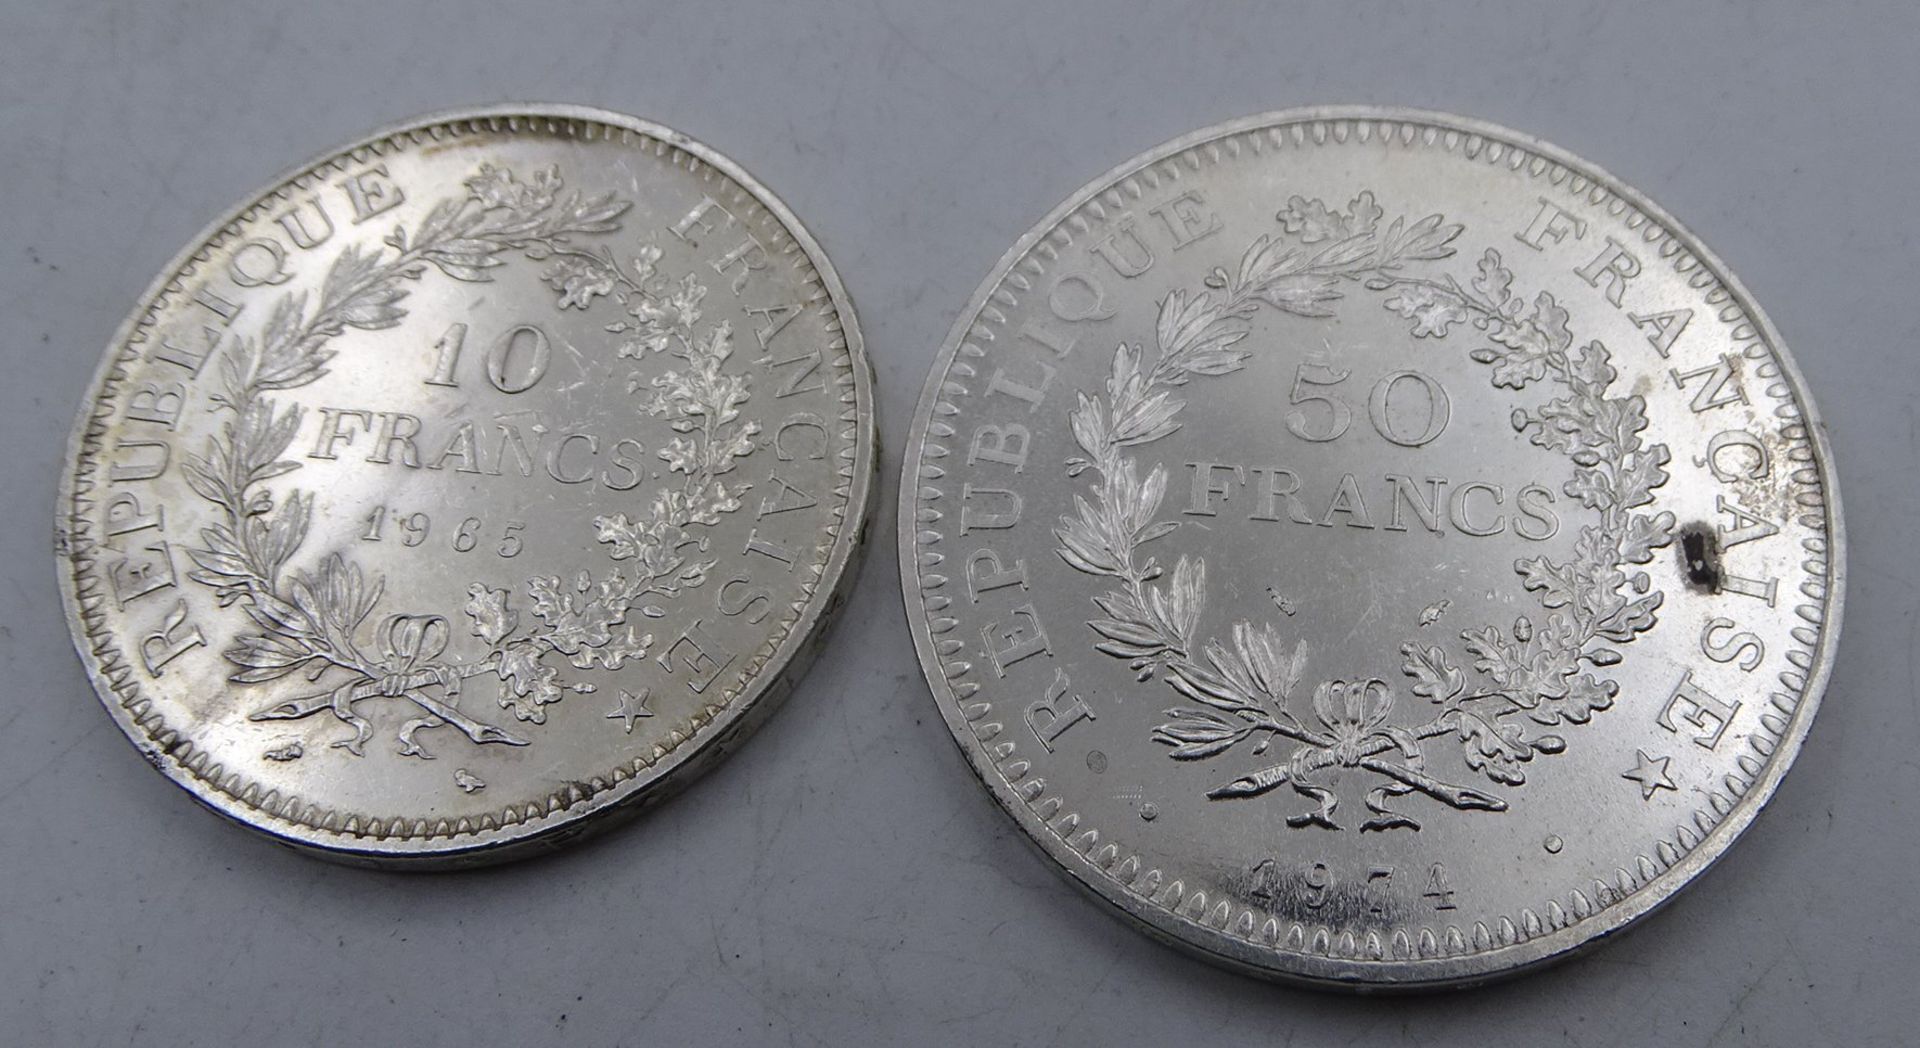 2x Silber-Münzen, Frankreich, 50 Franc 1974, 10 Franc 1965, zus. 54,7 gr. - Image 2 of 2